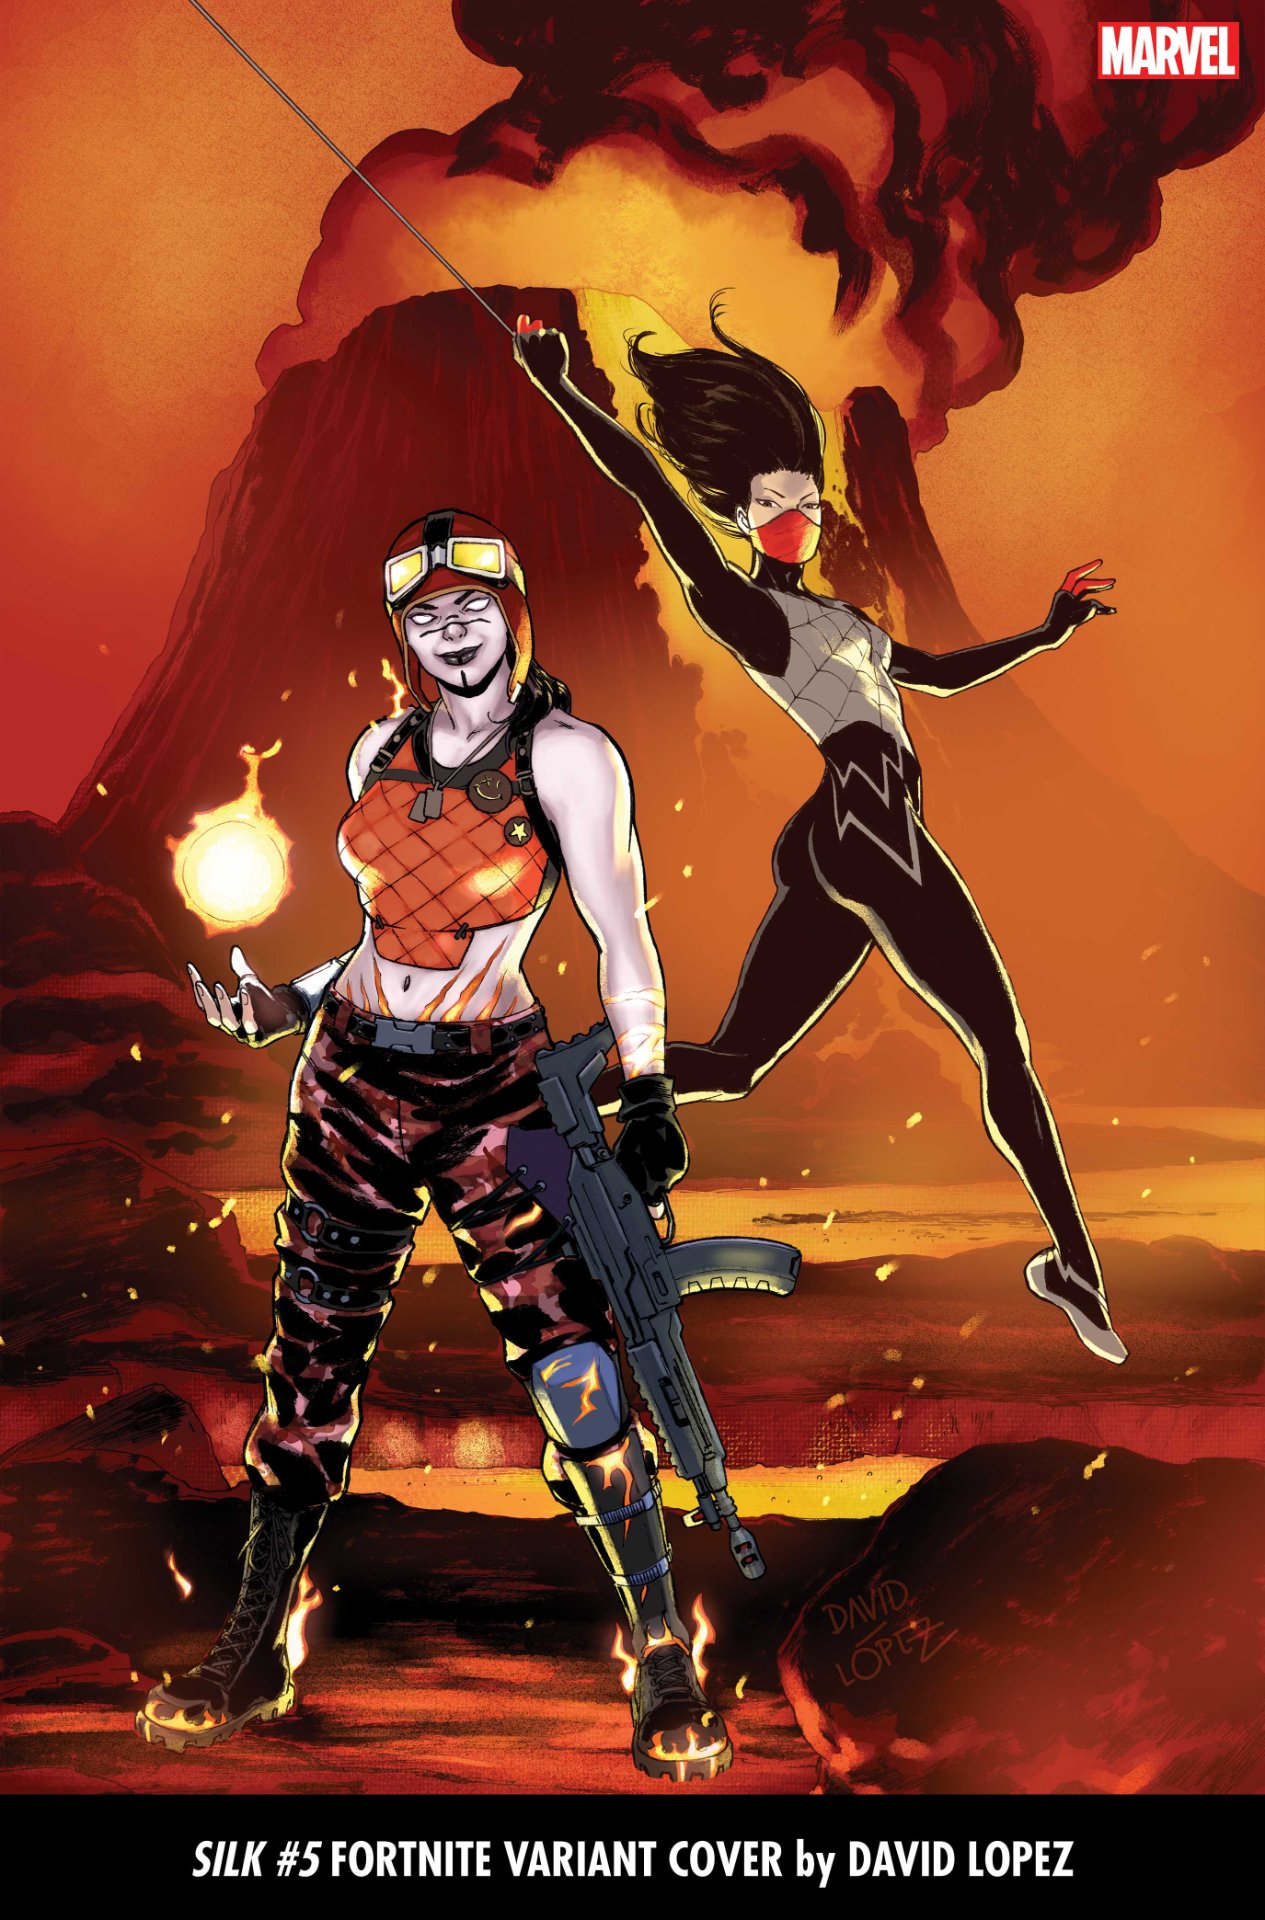 Fortnite X Marvel Zero War #1 covers